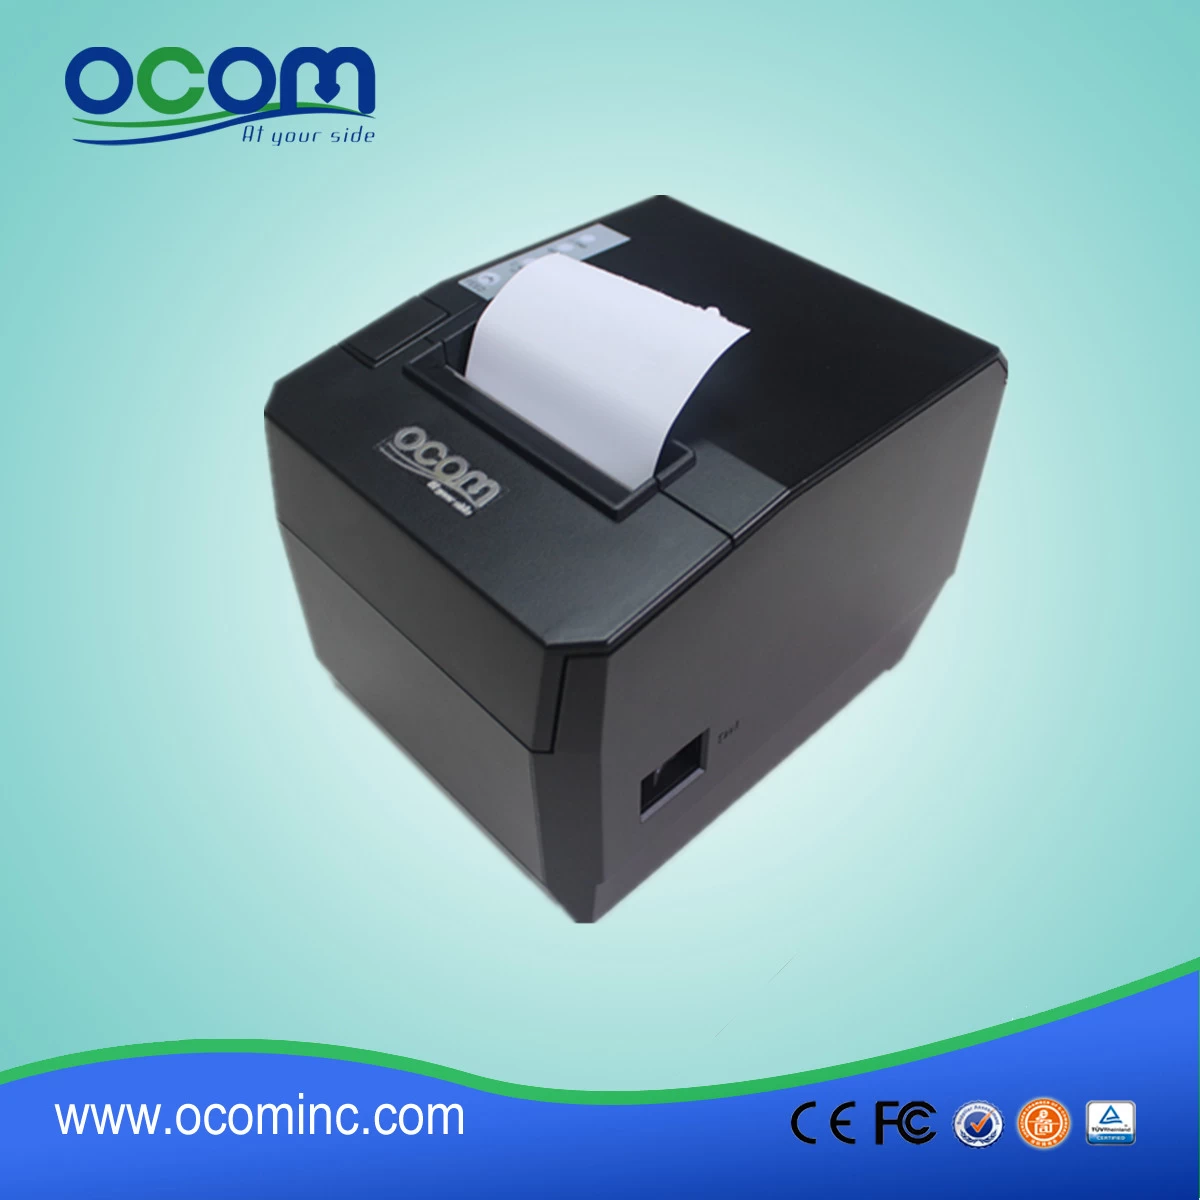 Re: 2015 newest 80mm WIFI thermal receipt printer-OCPP-88A-W